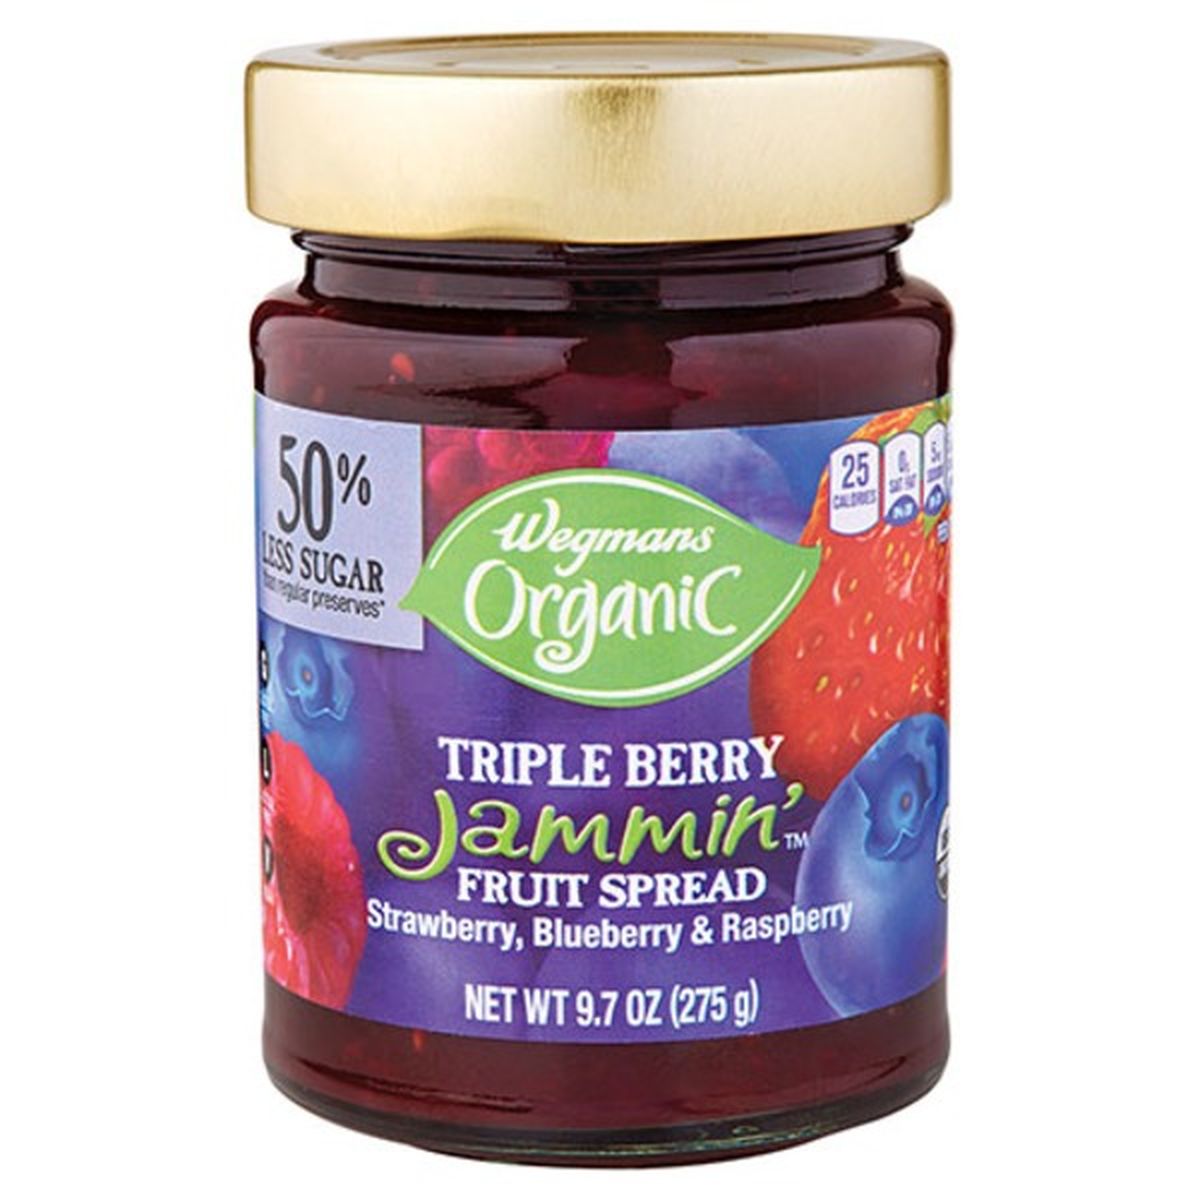 Calories in Wegmans Organic Jammin' Triple Berry Fruit Spread